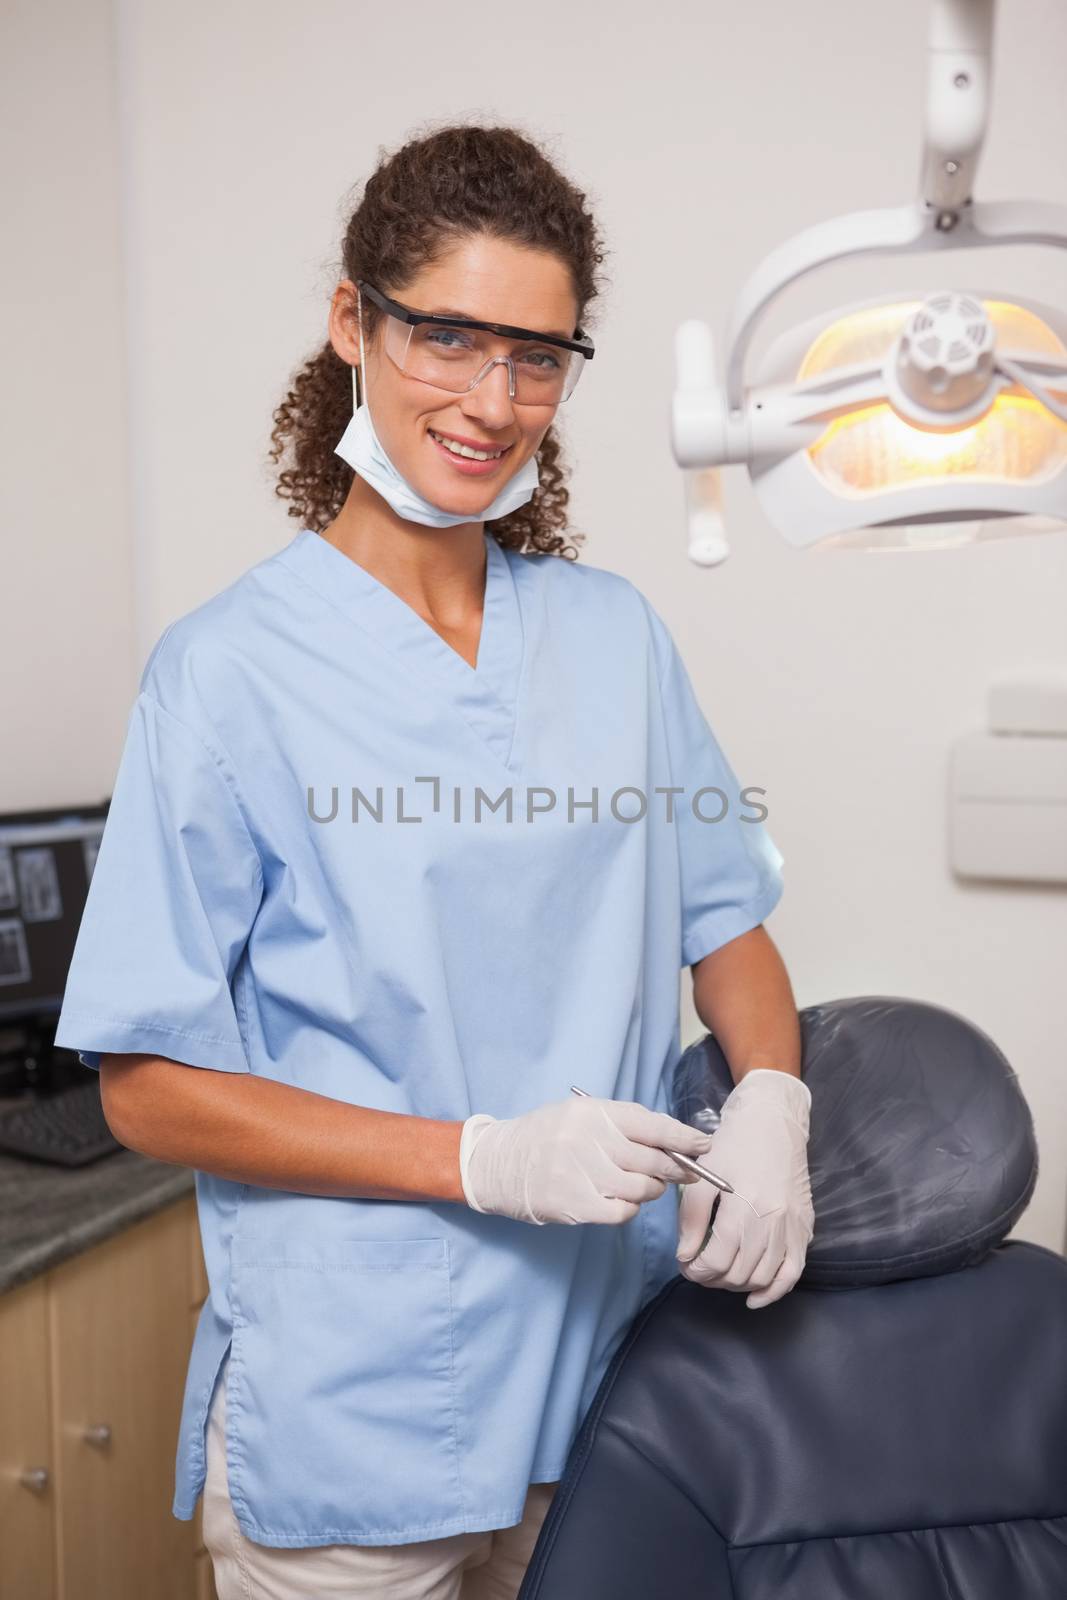 Dentist in blue scrubs smiling at camera  by Wavebreakmedia